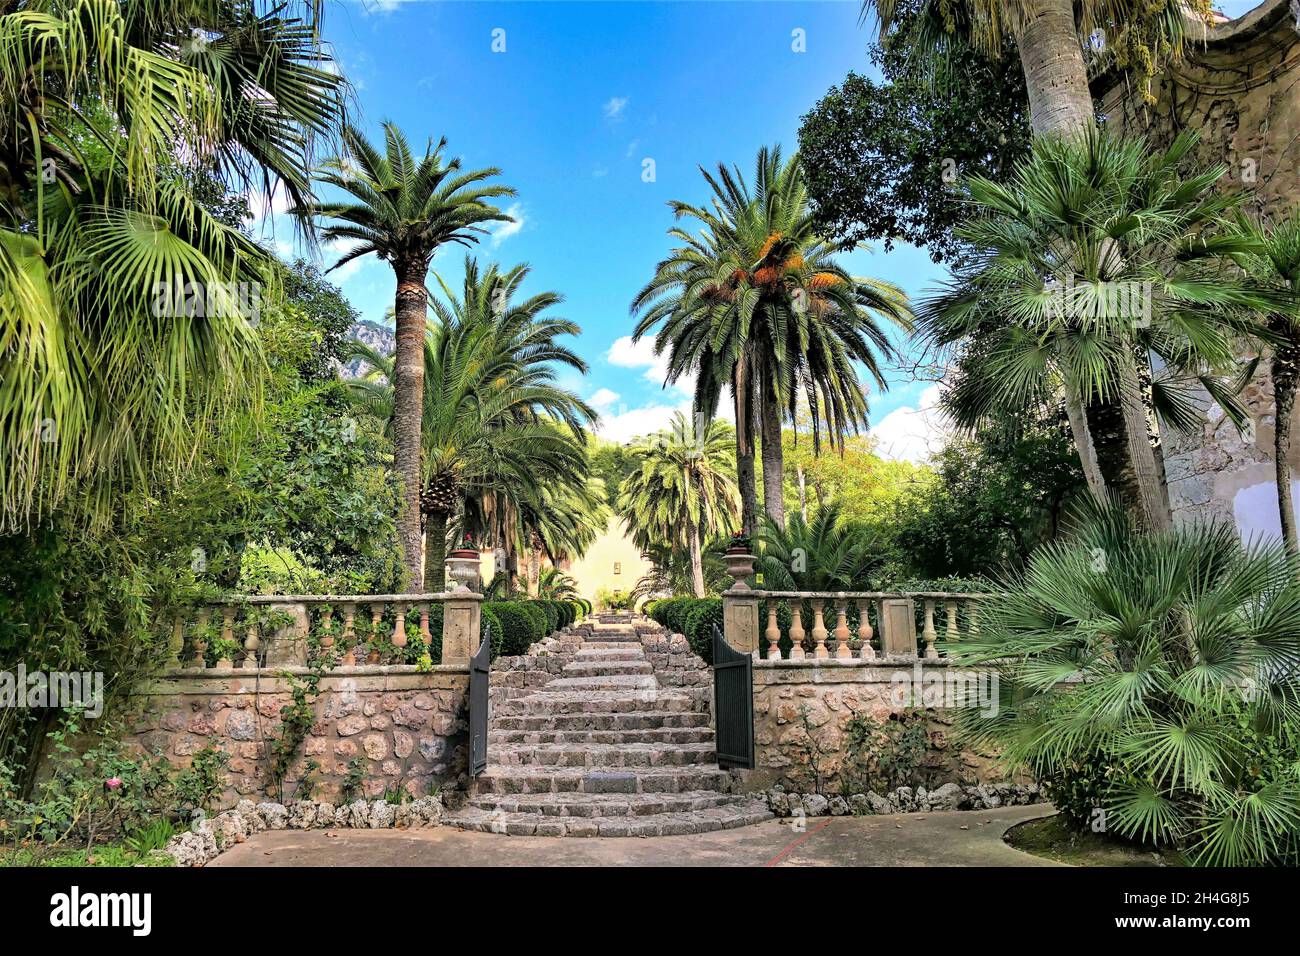 Palmen Garten Spanien Mallorca Bilder Foto Stock